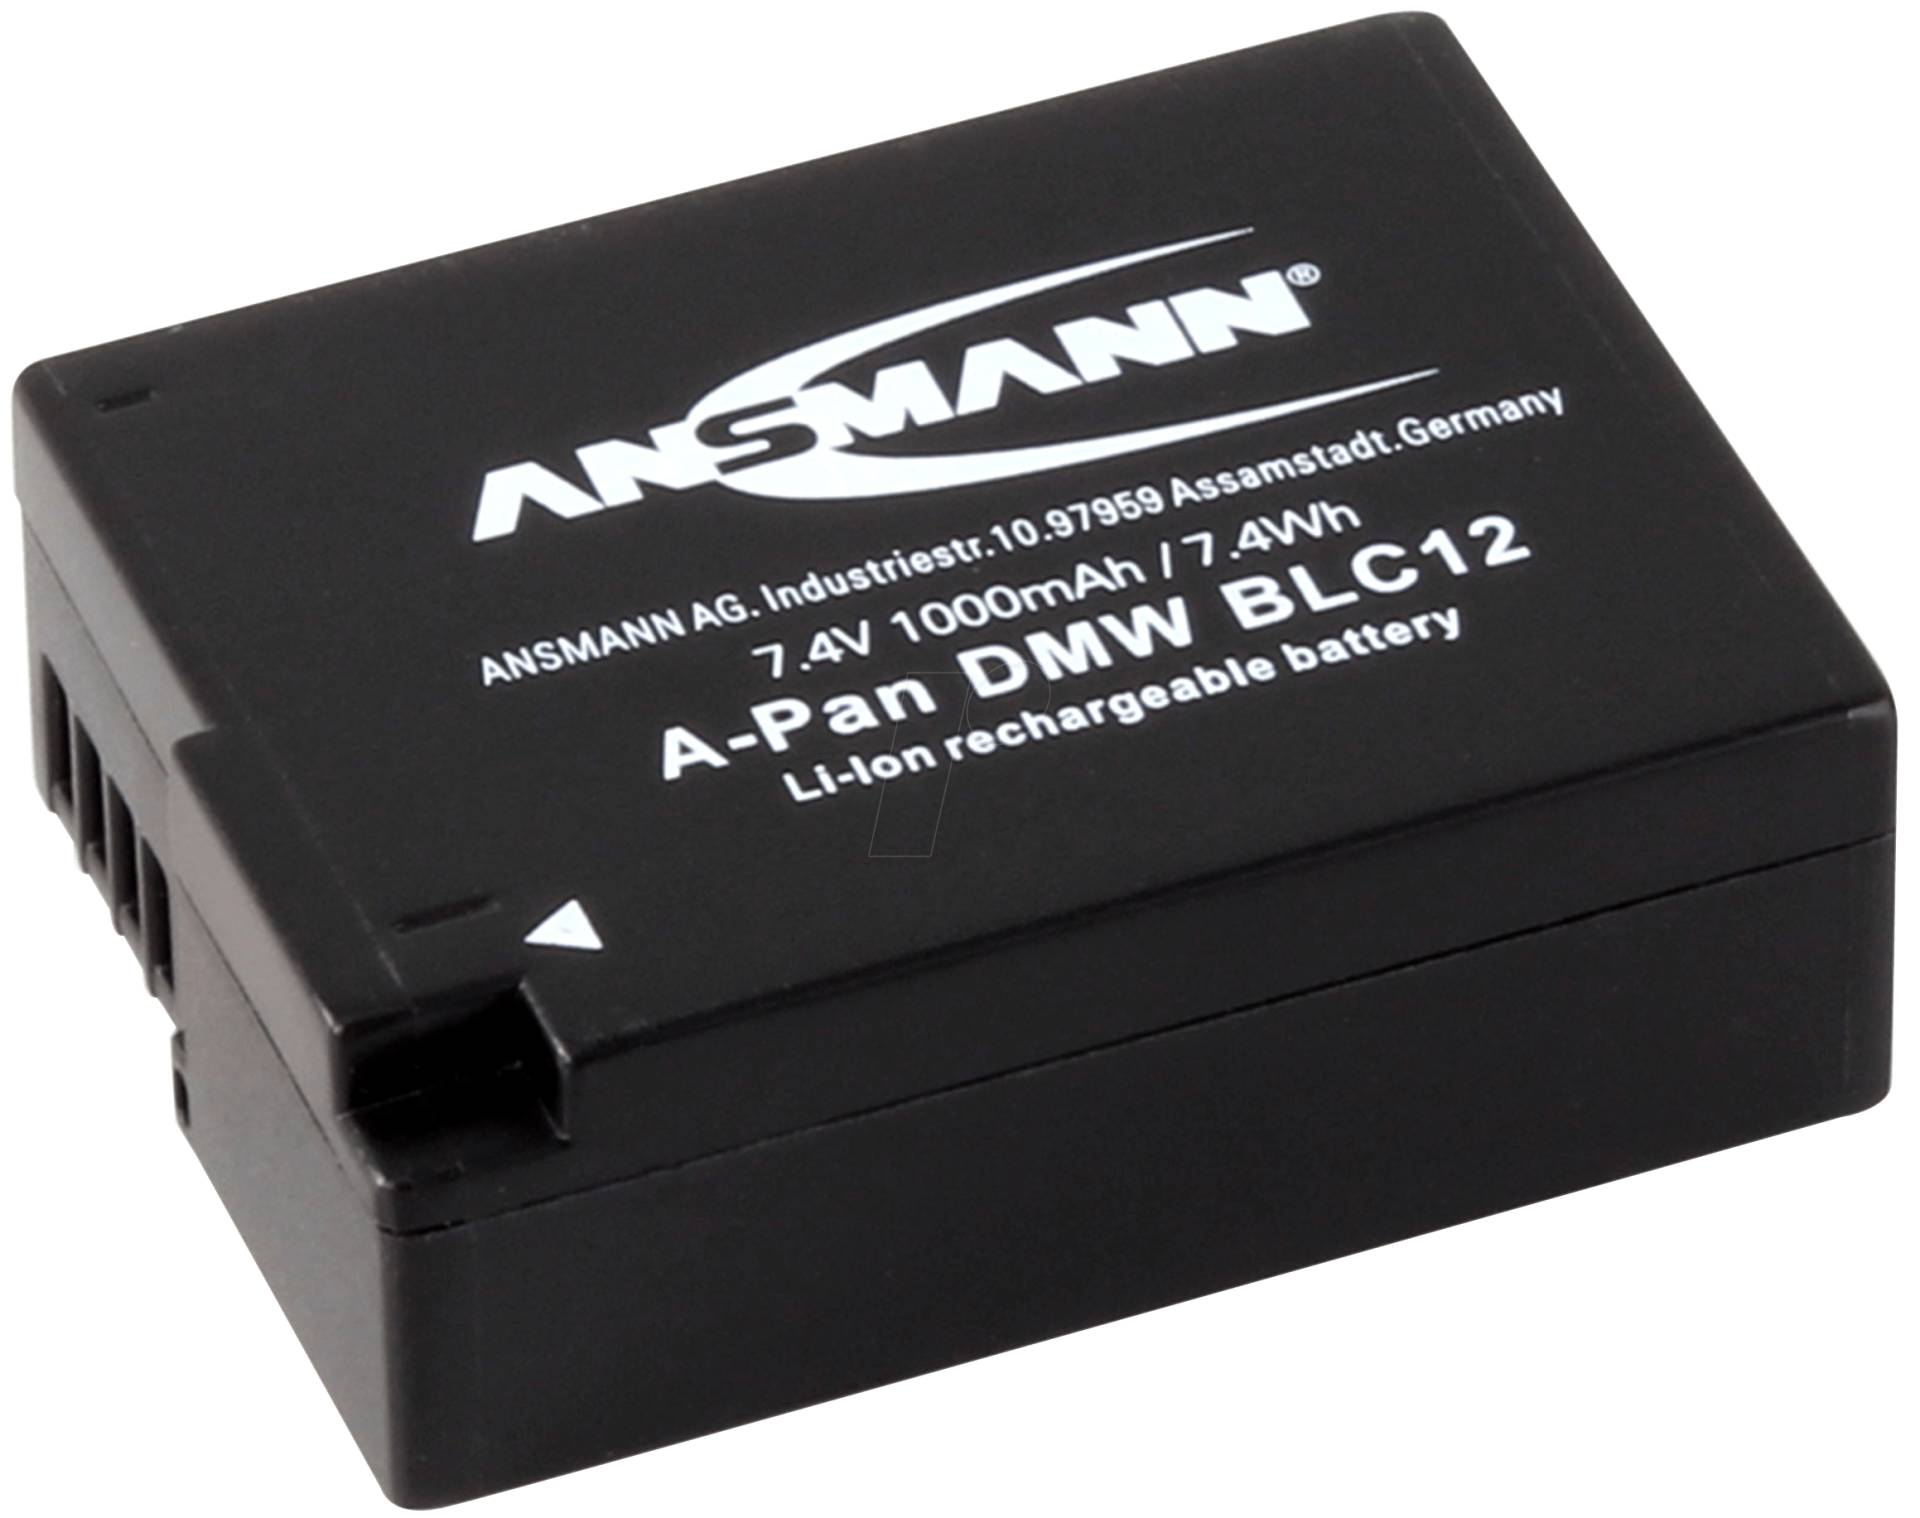 ANS 1400-0056 - Akku, Digitalkamera, kompatibel, 1000 mAh, Panasonic von Ansmann